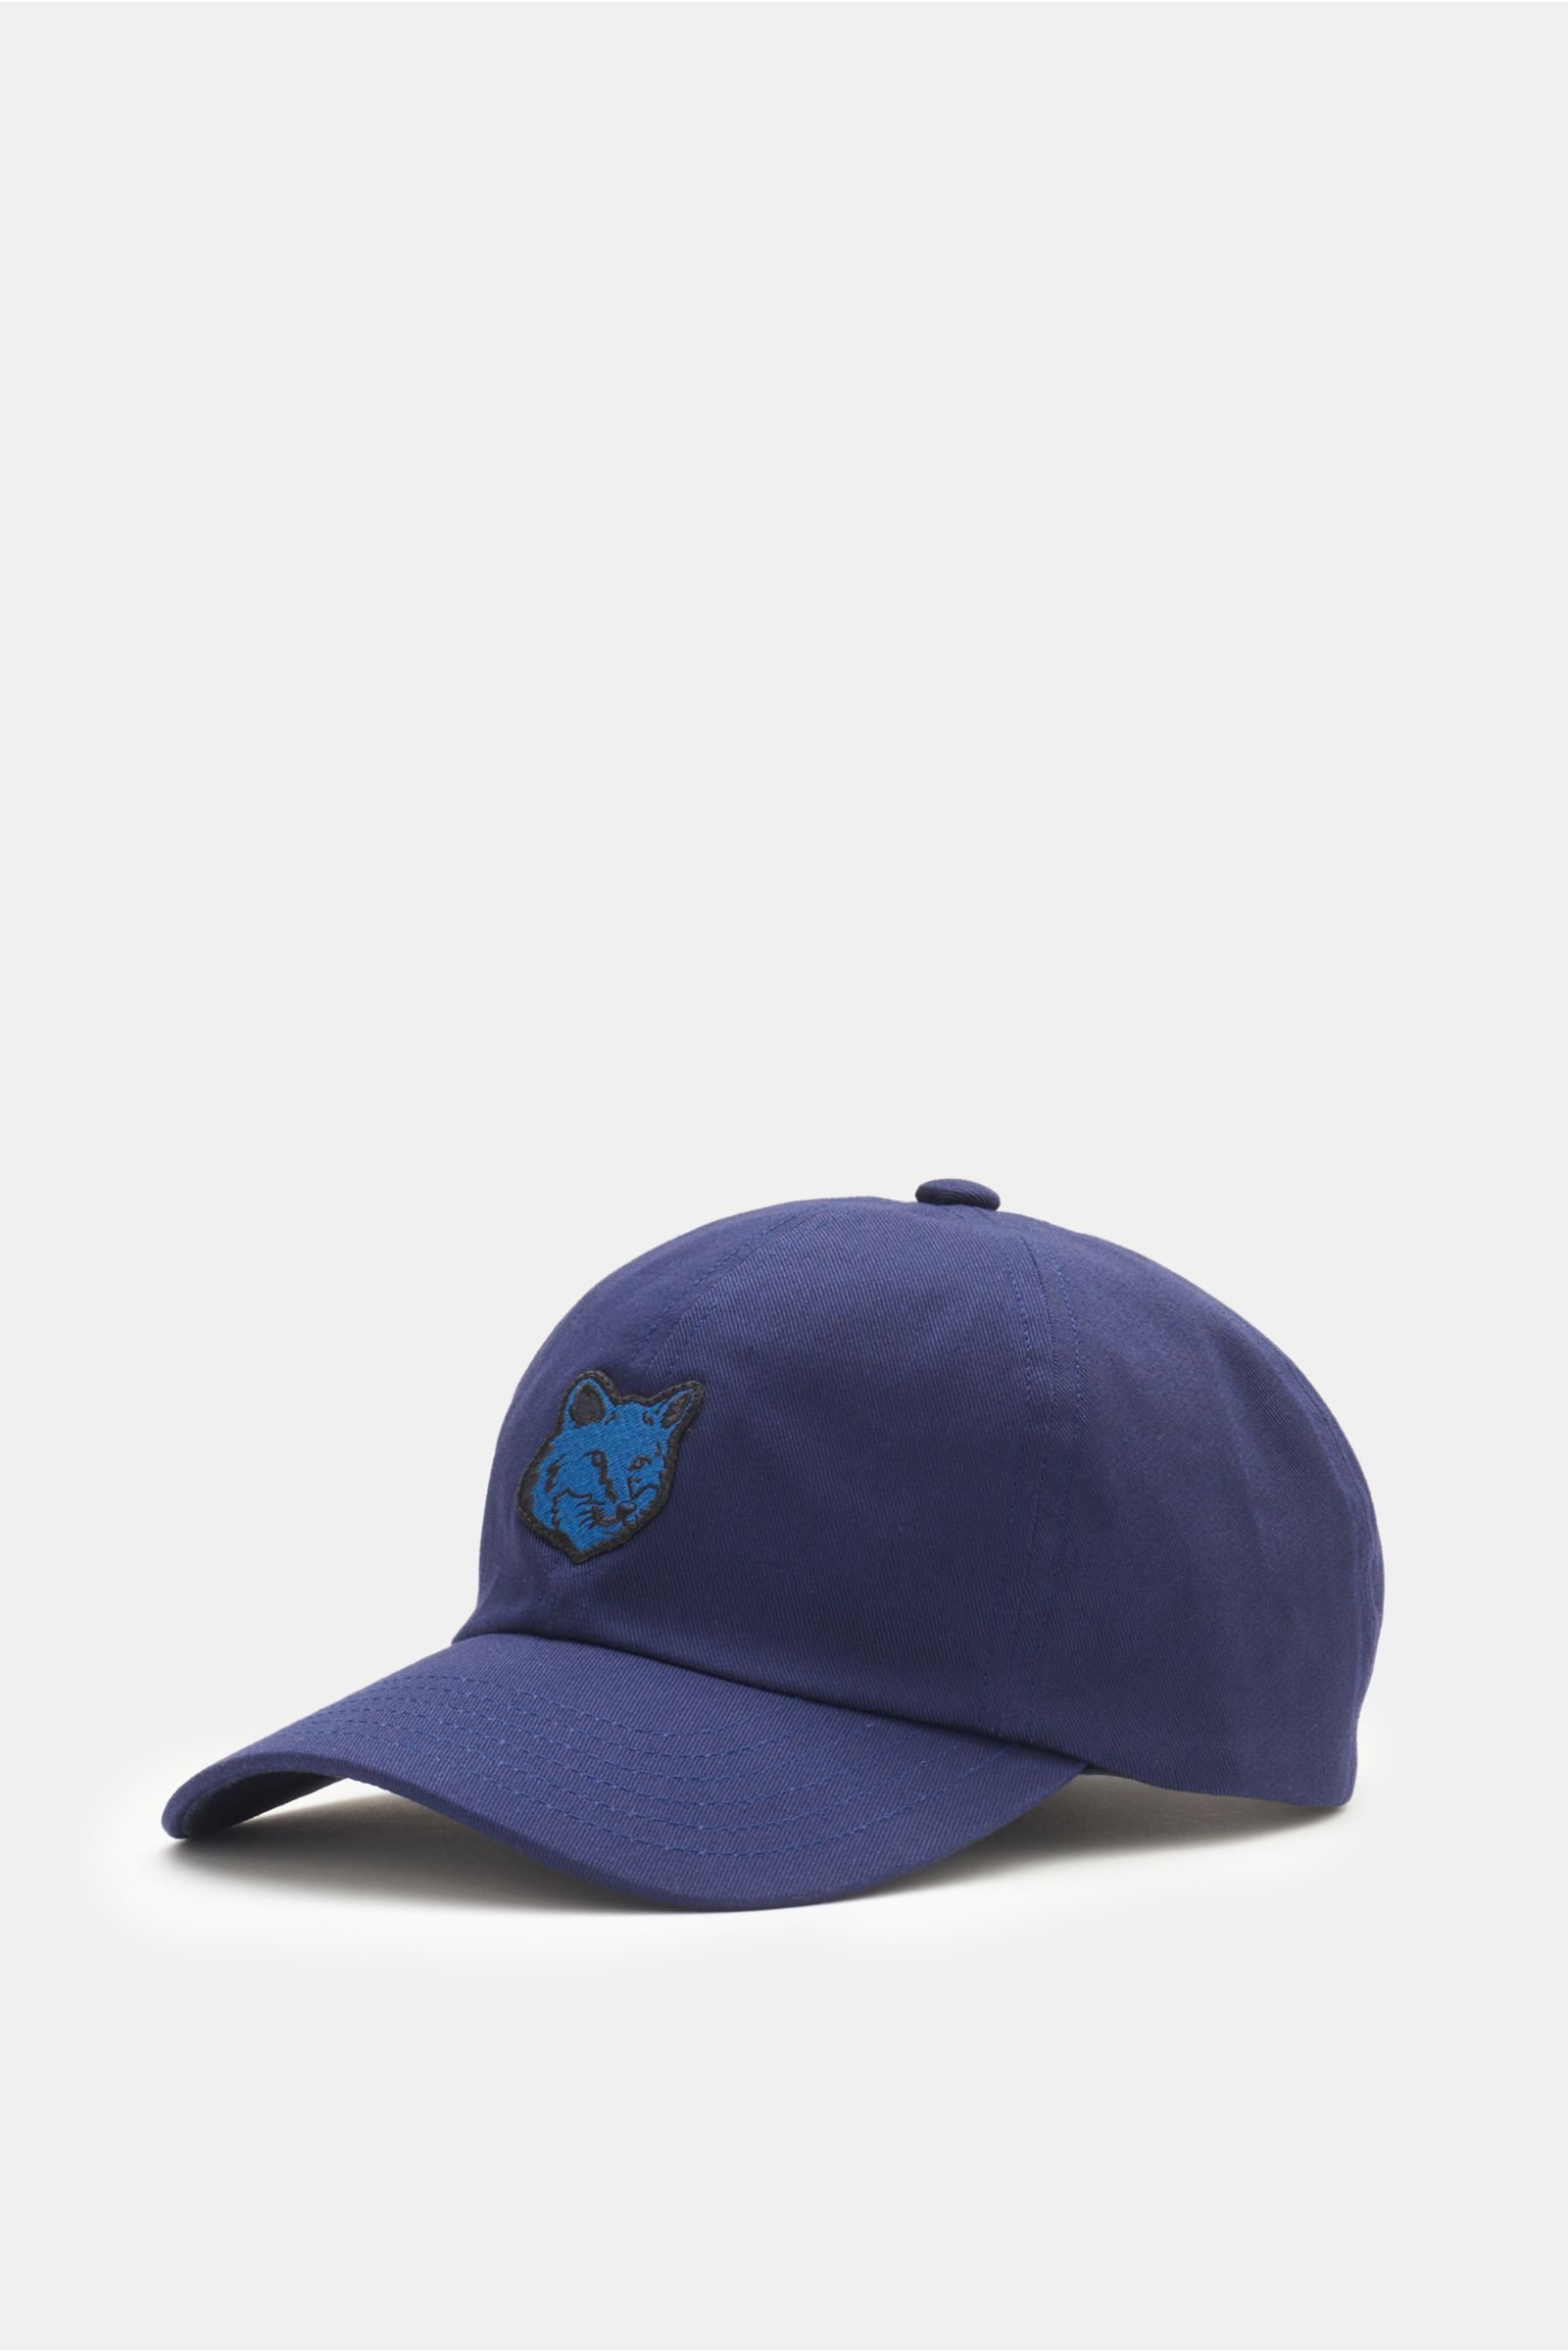 Baseball cap dark blue